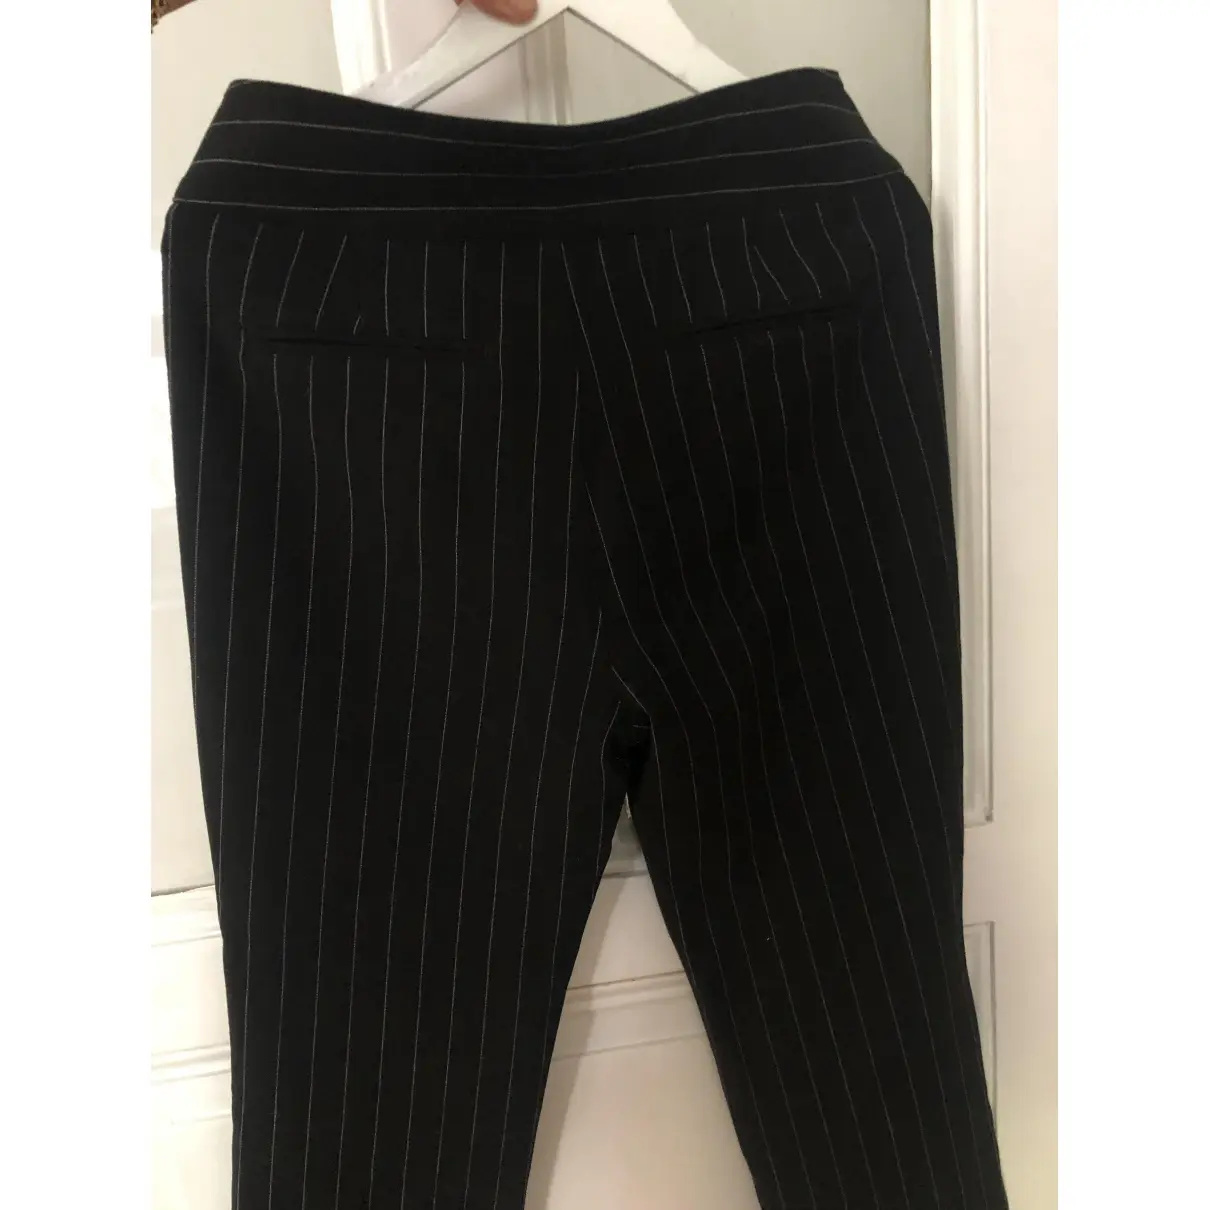 Buy Ganni Wool chino pants online